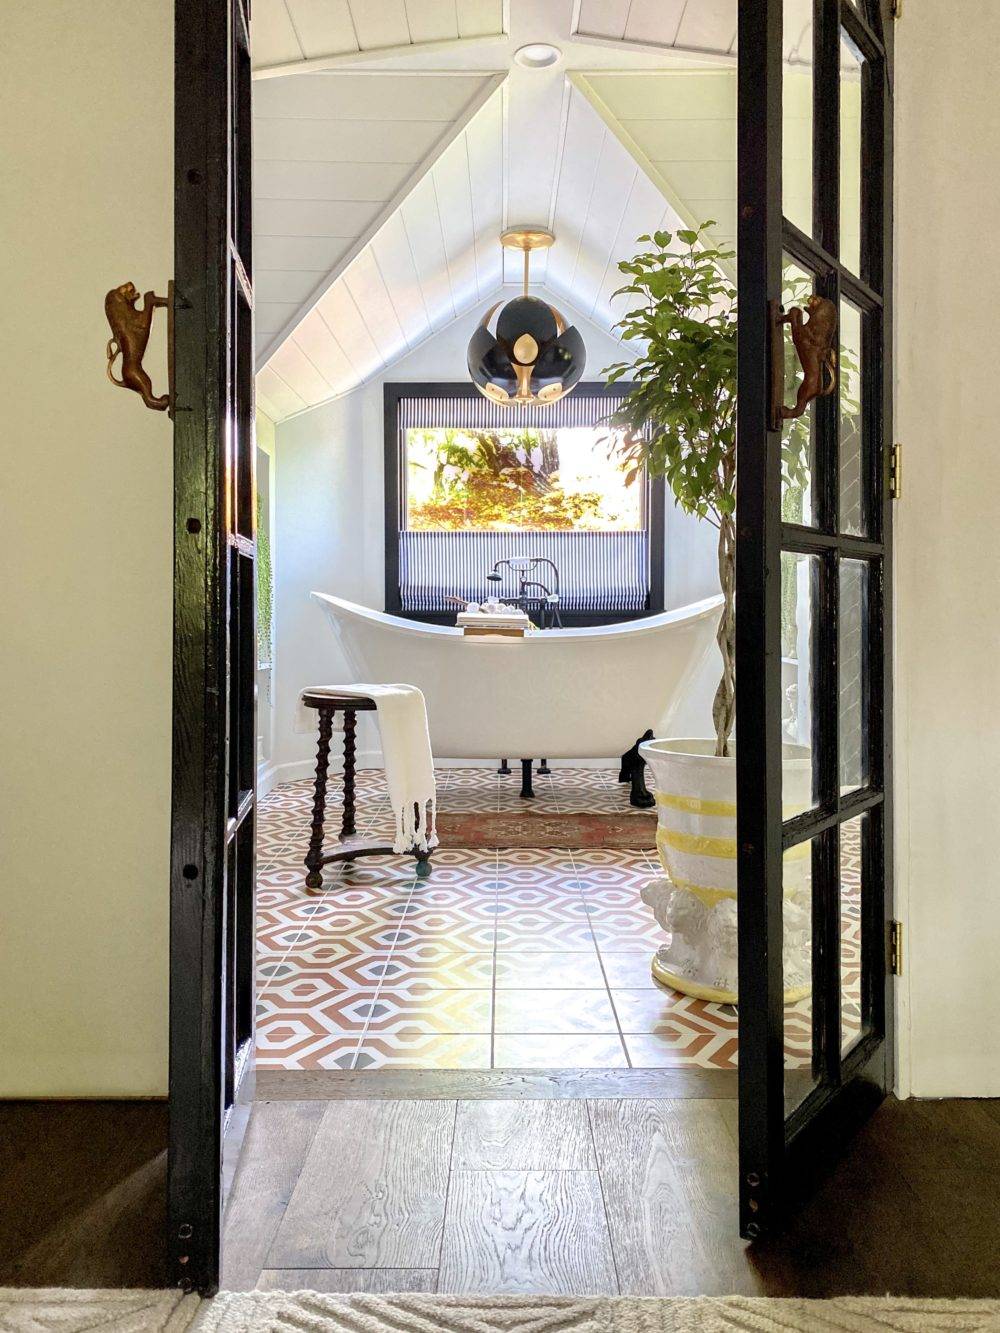 Door opening to large bathroom with orange patterned tile flooring and freestanding bathtub